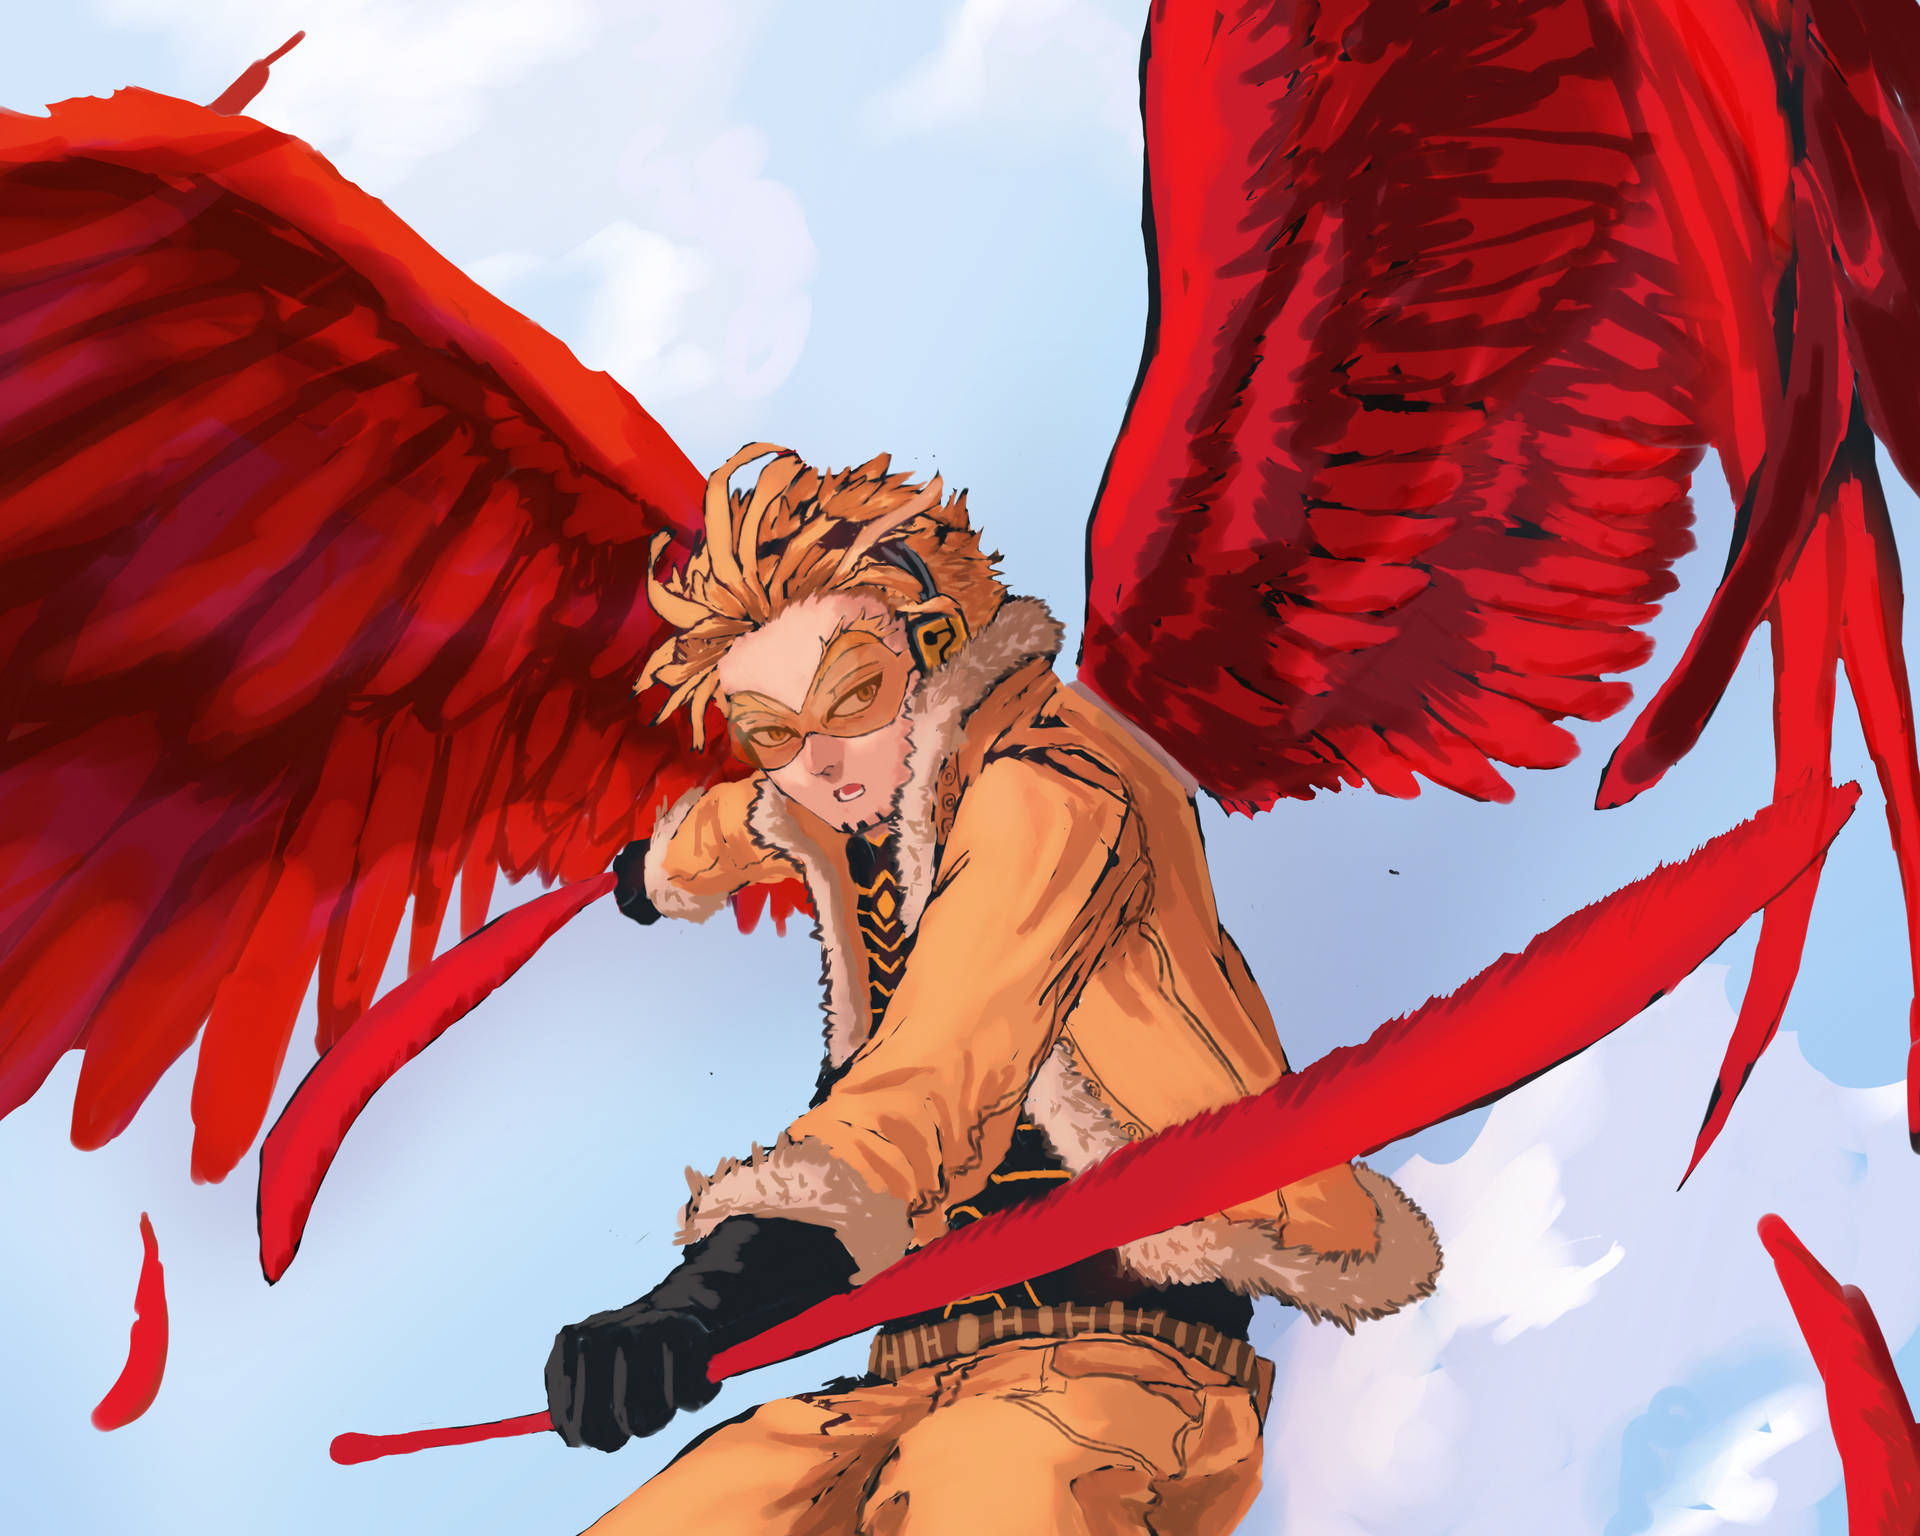 "The Wildly Popular Hero Hawks Circling The Skies" Wallpaper